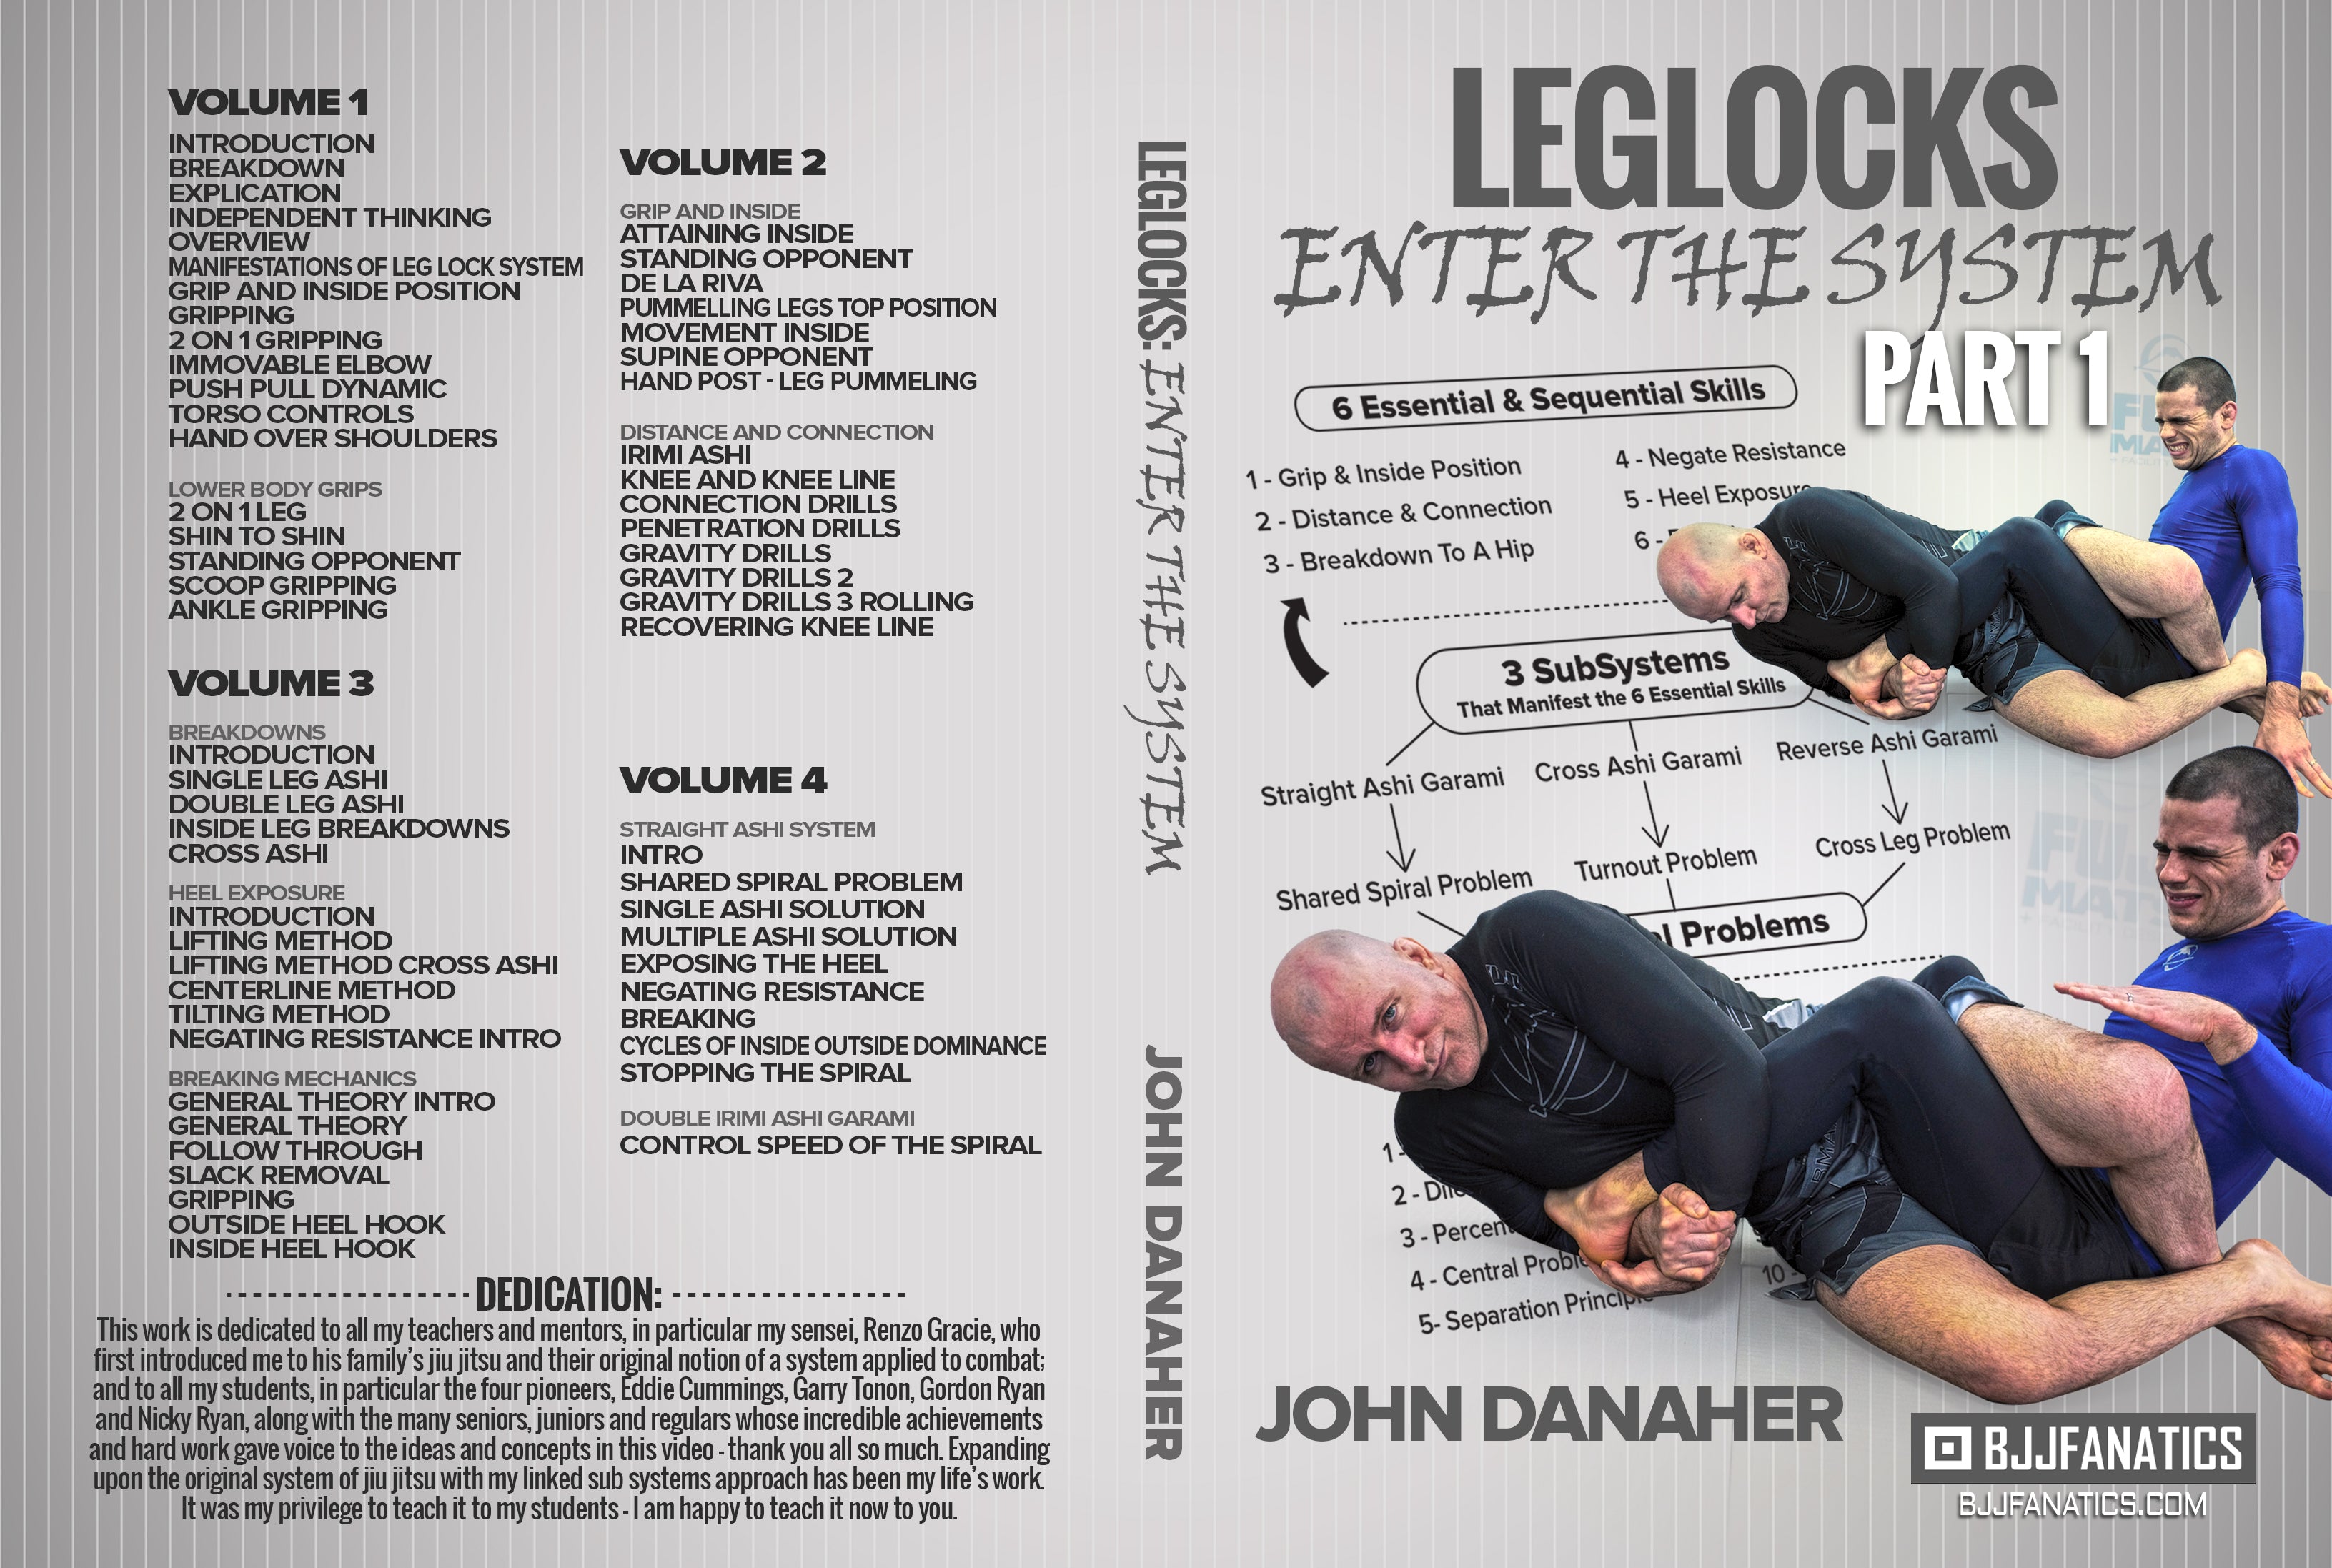 Leglocks: Enter The System By John Danaher